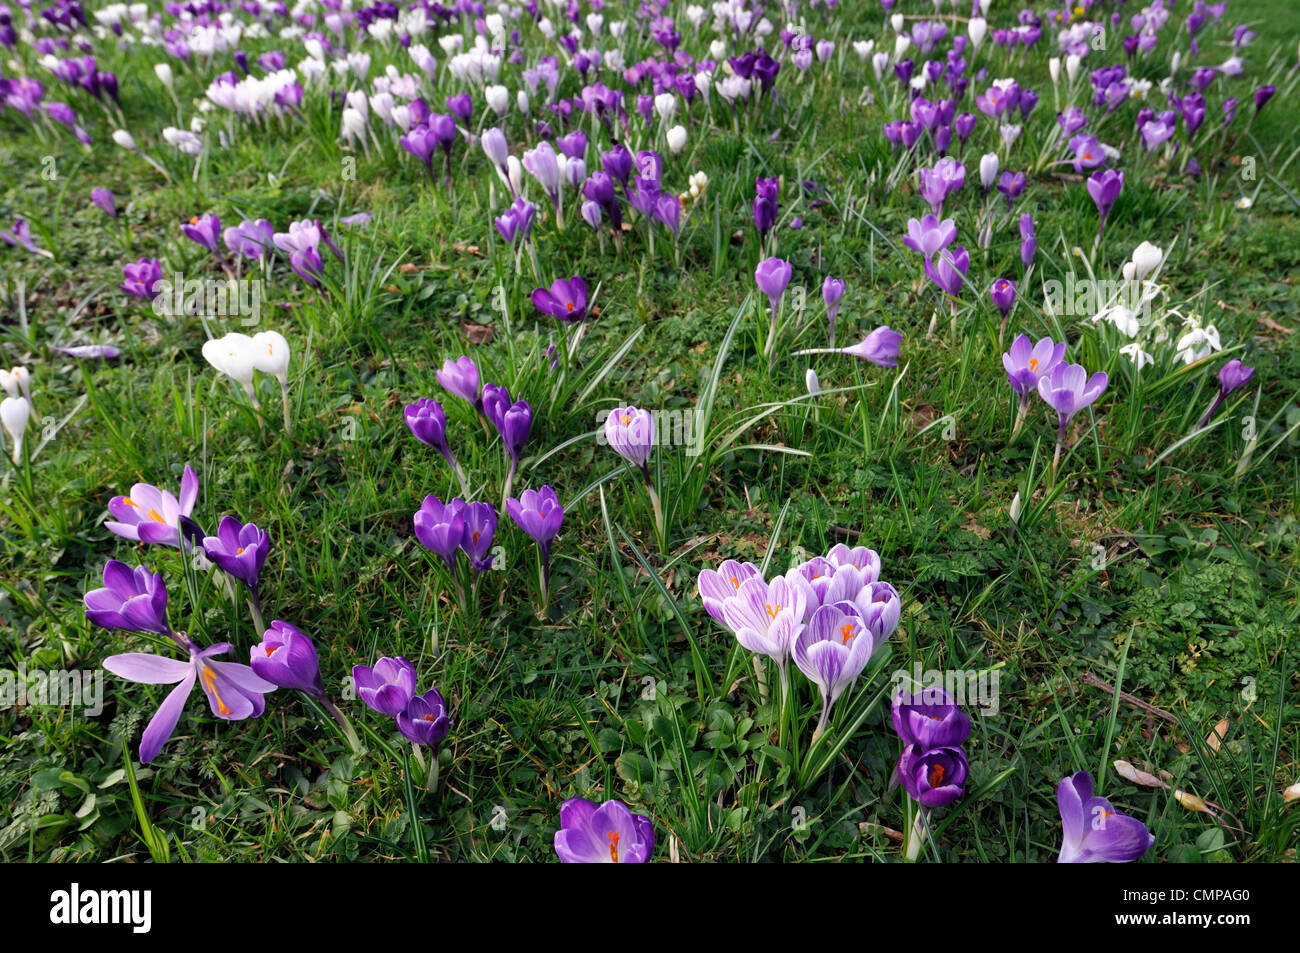 naturalised crocus flowers growing grow lawn park flowering mixed colours purple white spring masses en masse carpet crocuses Stock Photo